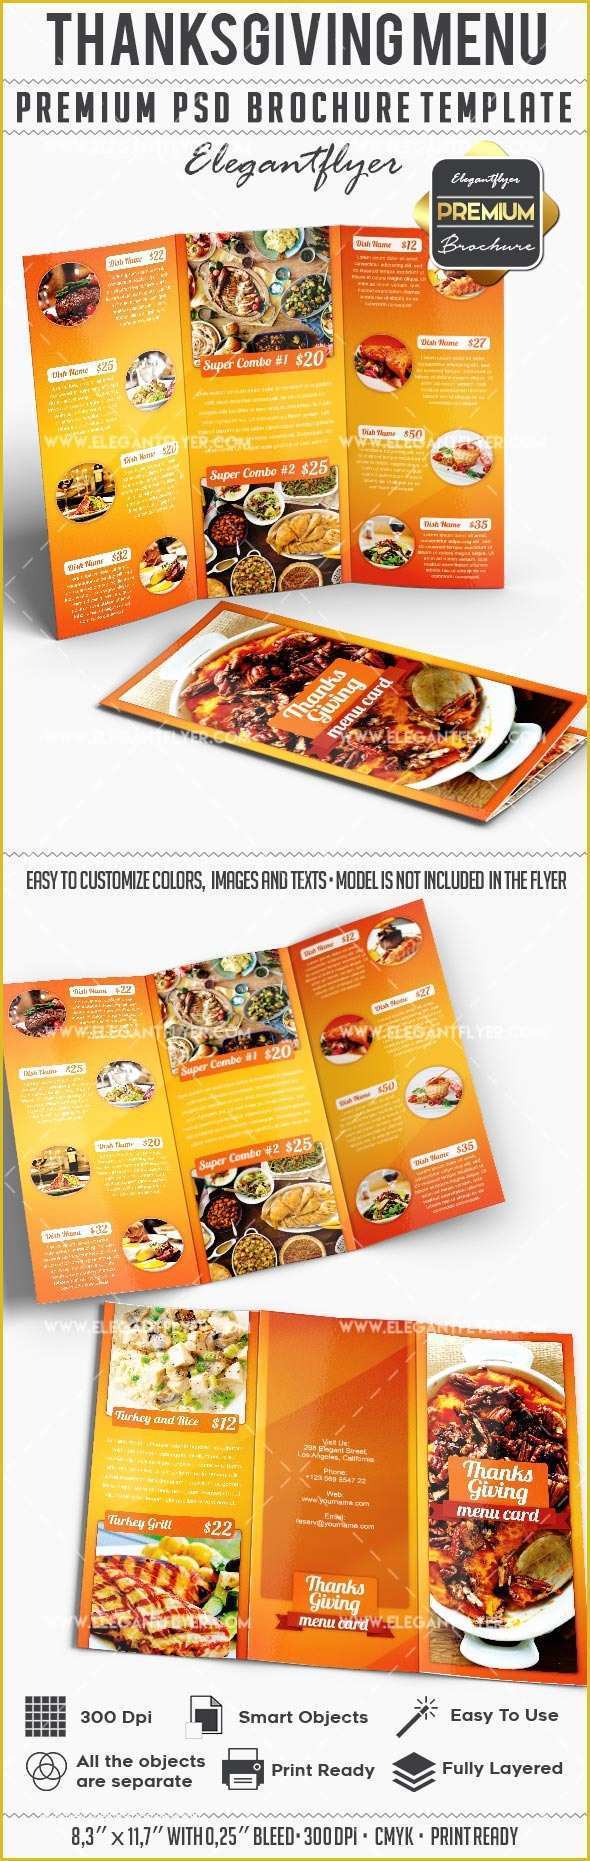 Tri Fold Brochure Template Psd Free Download Of Thanksgiving Day Tri Fold Brochure – by Elegantflyer